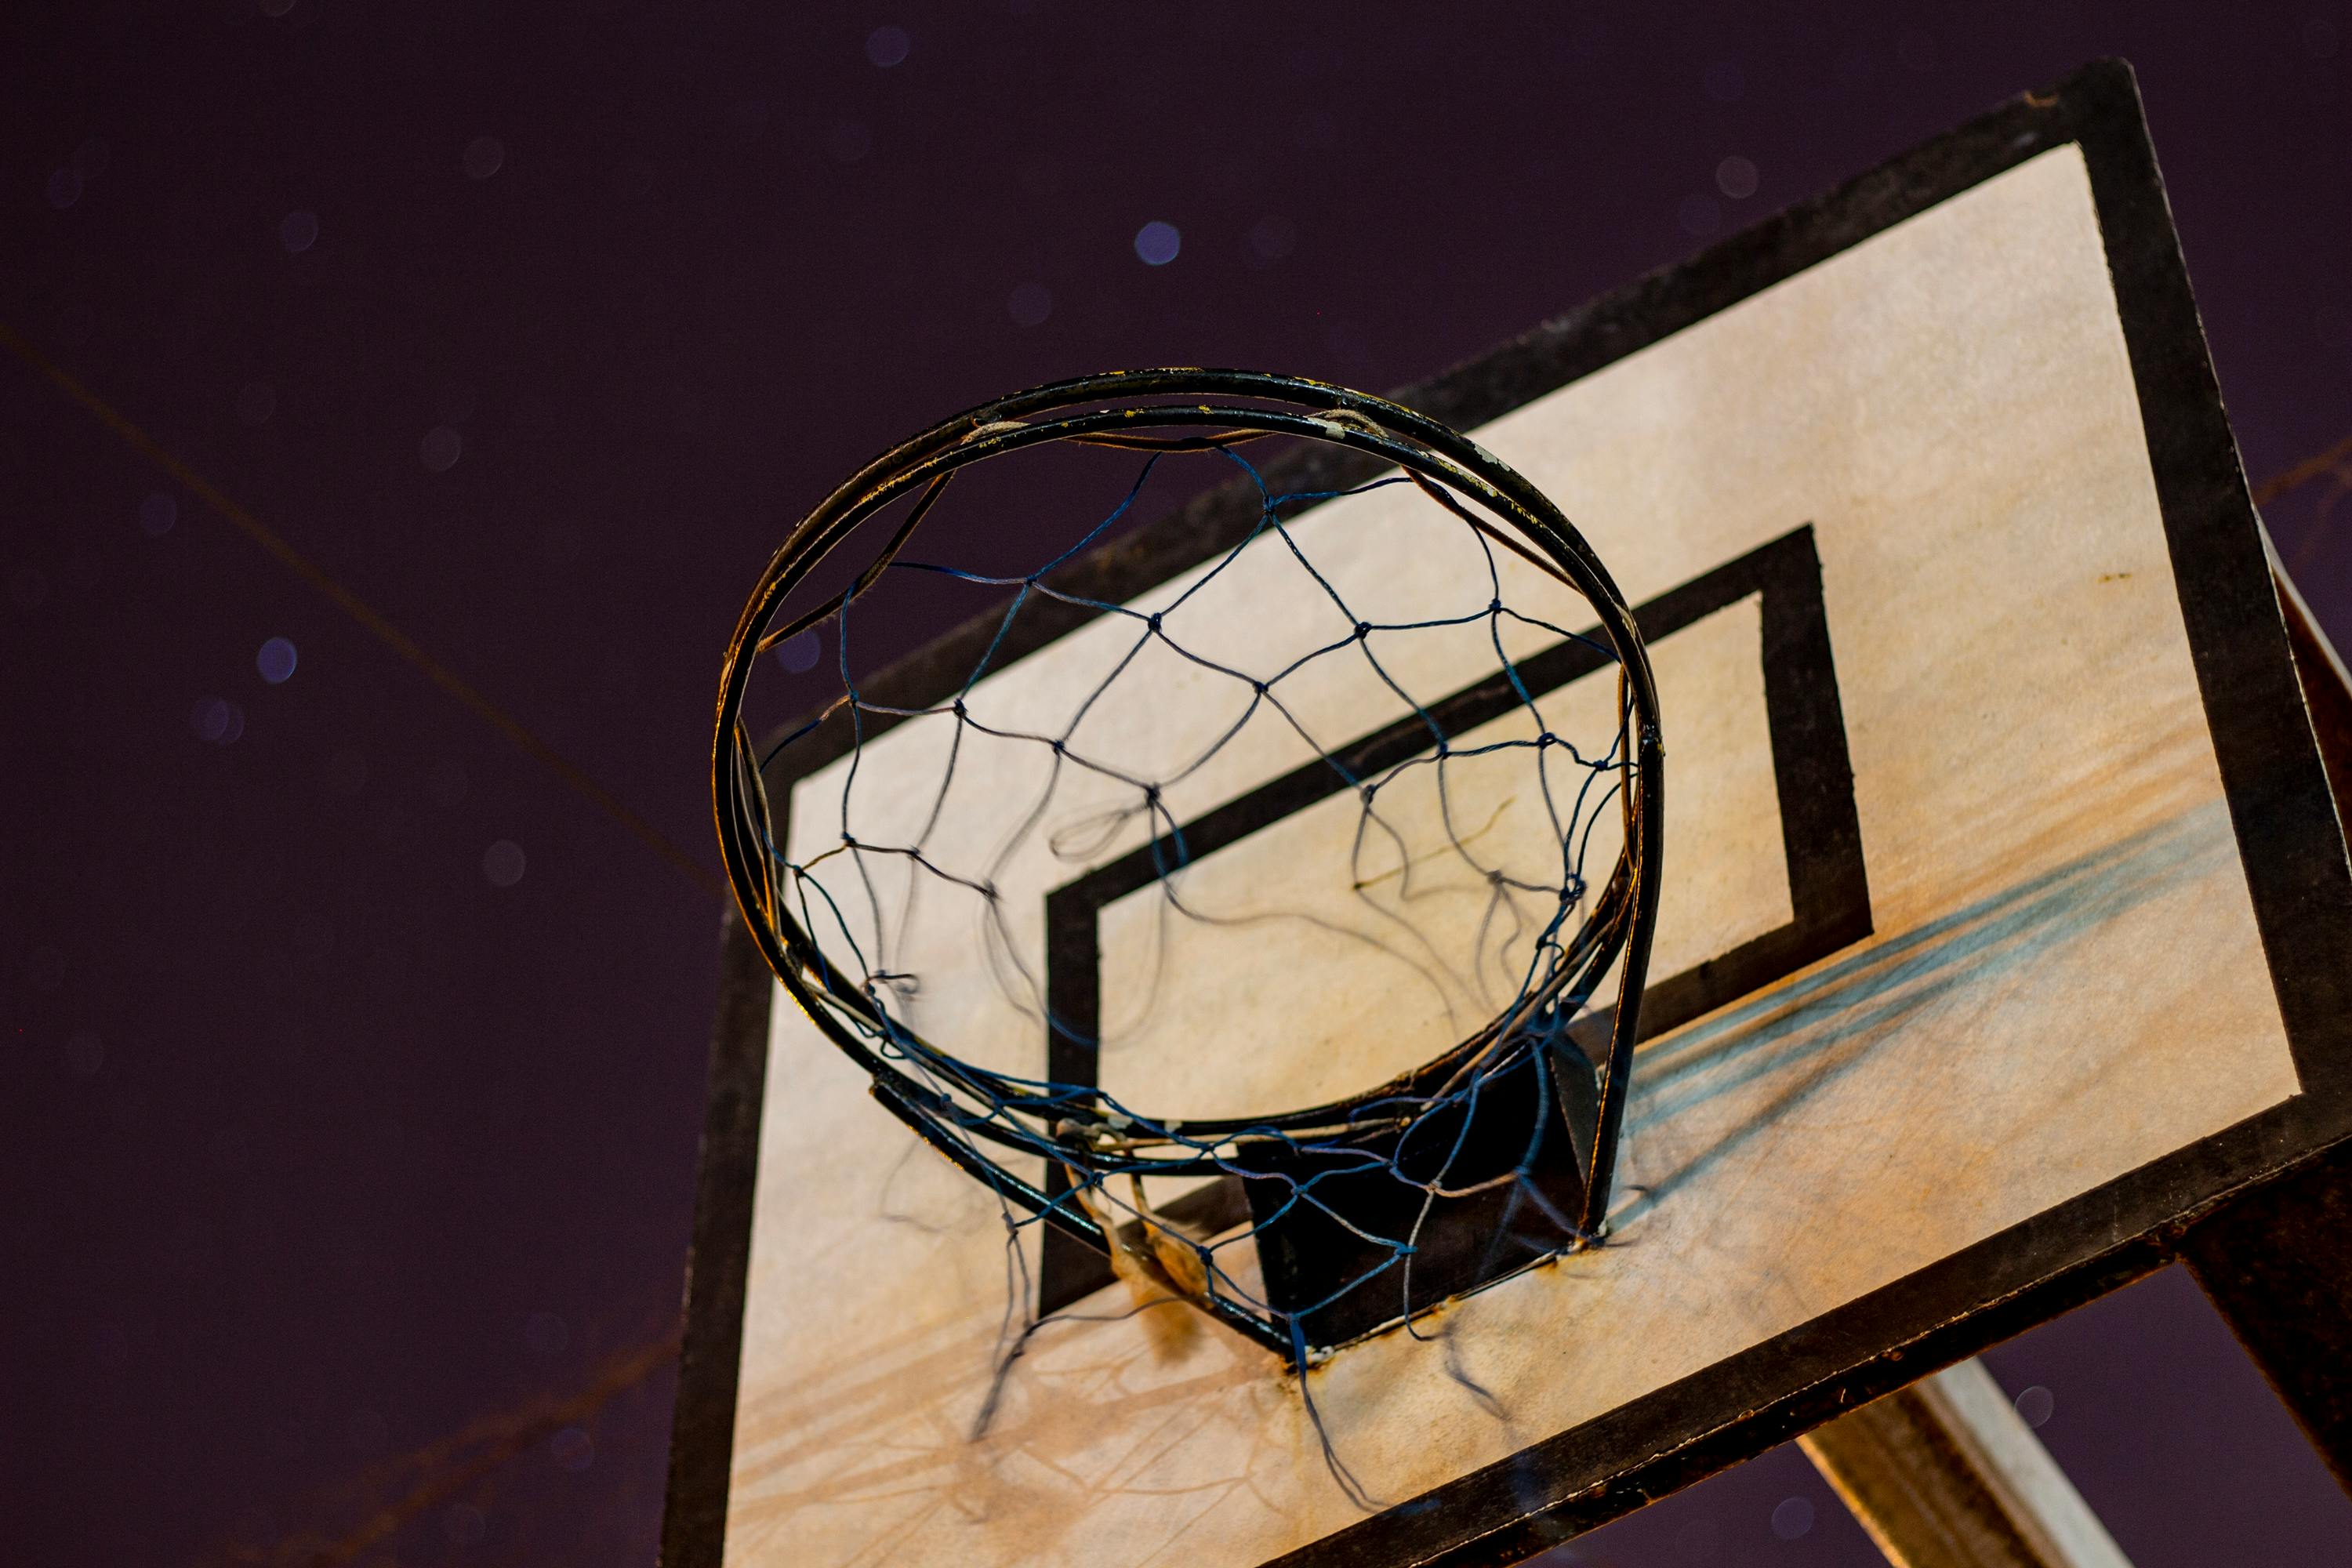 Basketball Hoop Reflecting on Water · Free Stock Photo